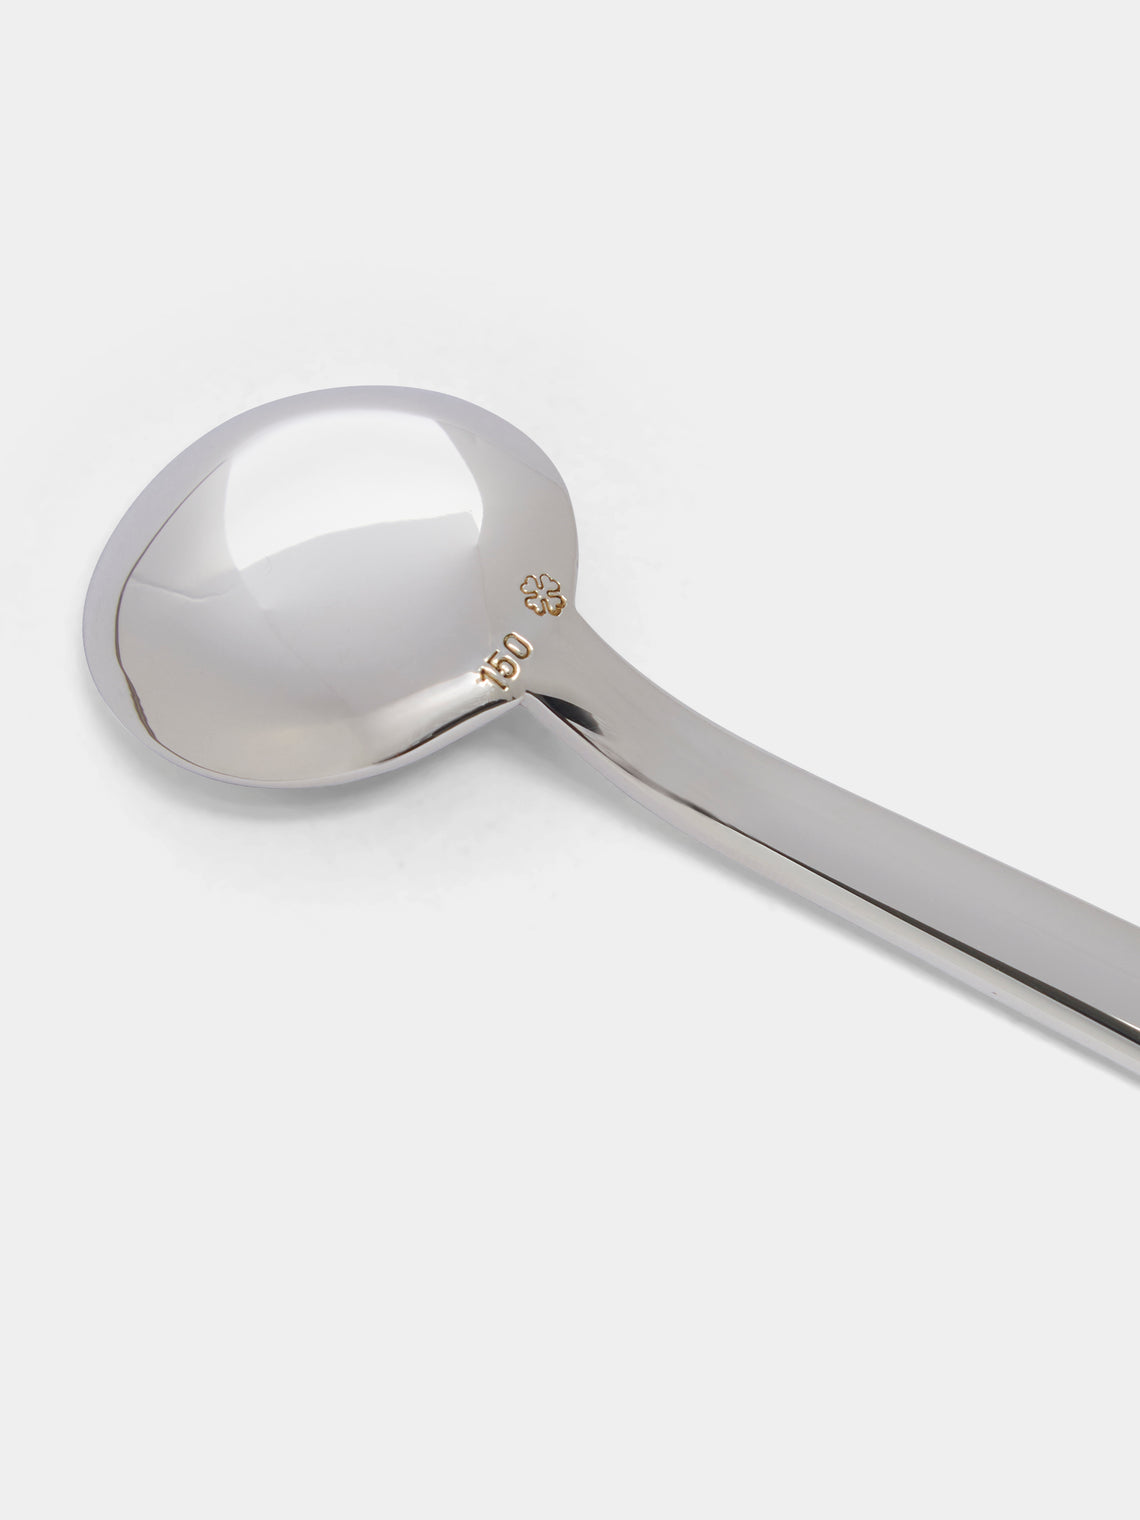 Wiener Silber Manufactur - Josef Hoffmann Sterling Silver Spice Spoon - Silver - ABASK